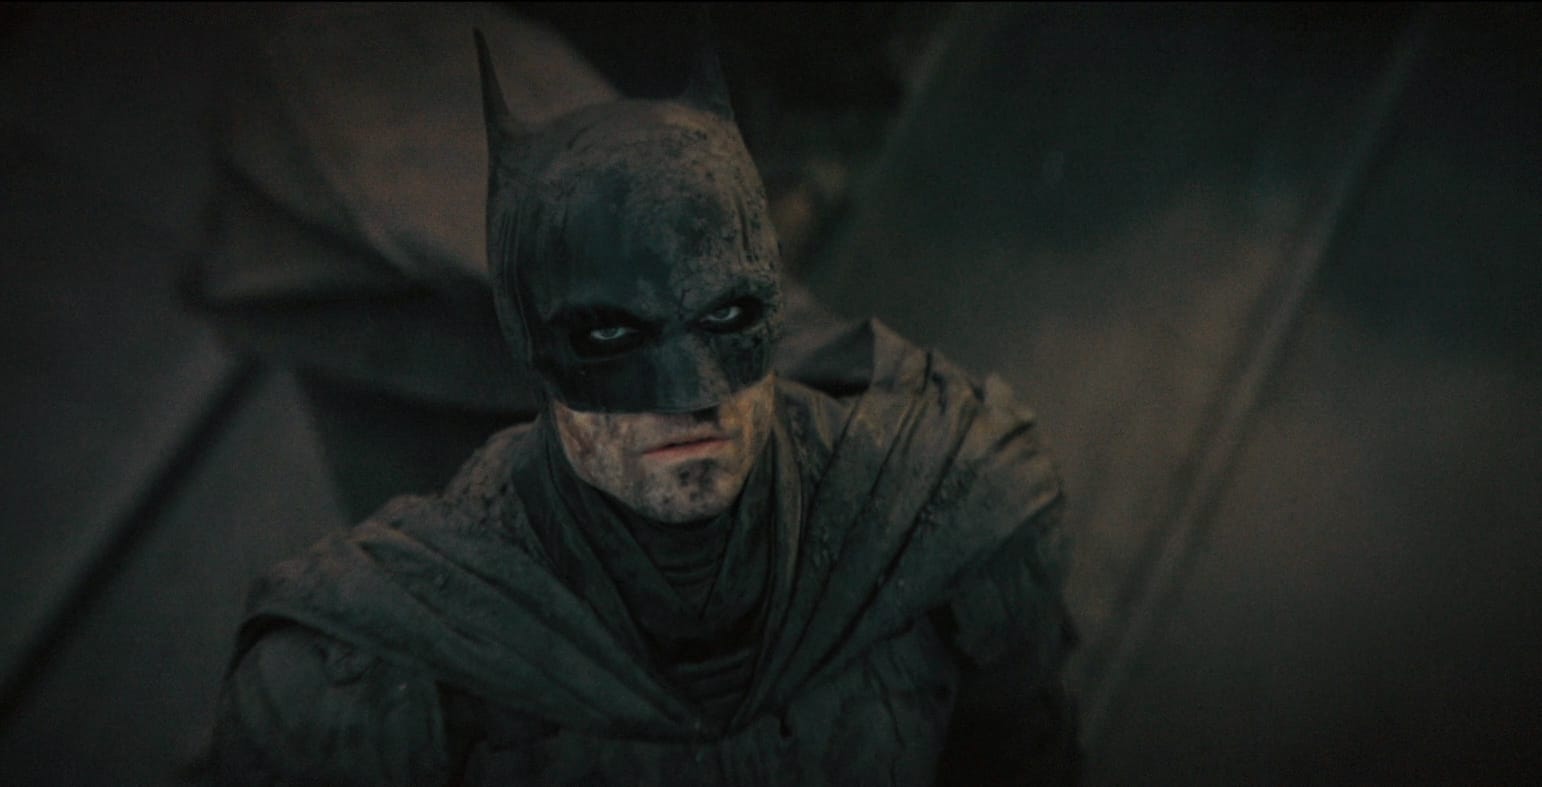 The Batman, Robert Pattinson veste i panni dell'uomo [ipistrello